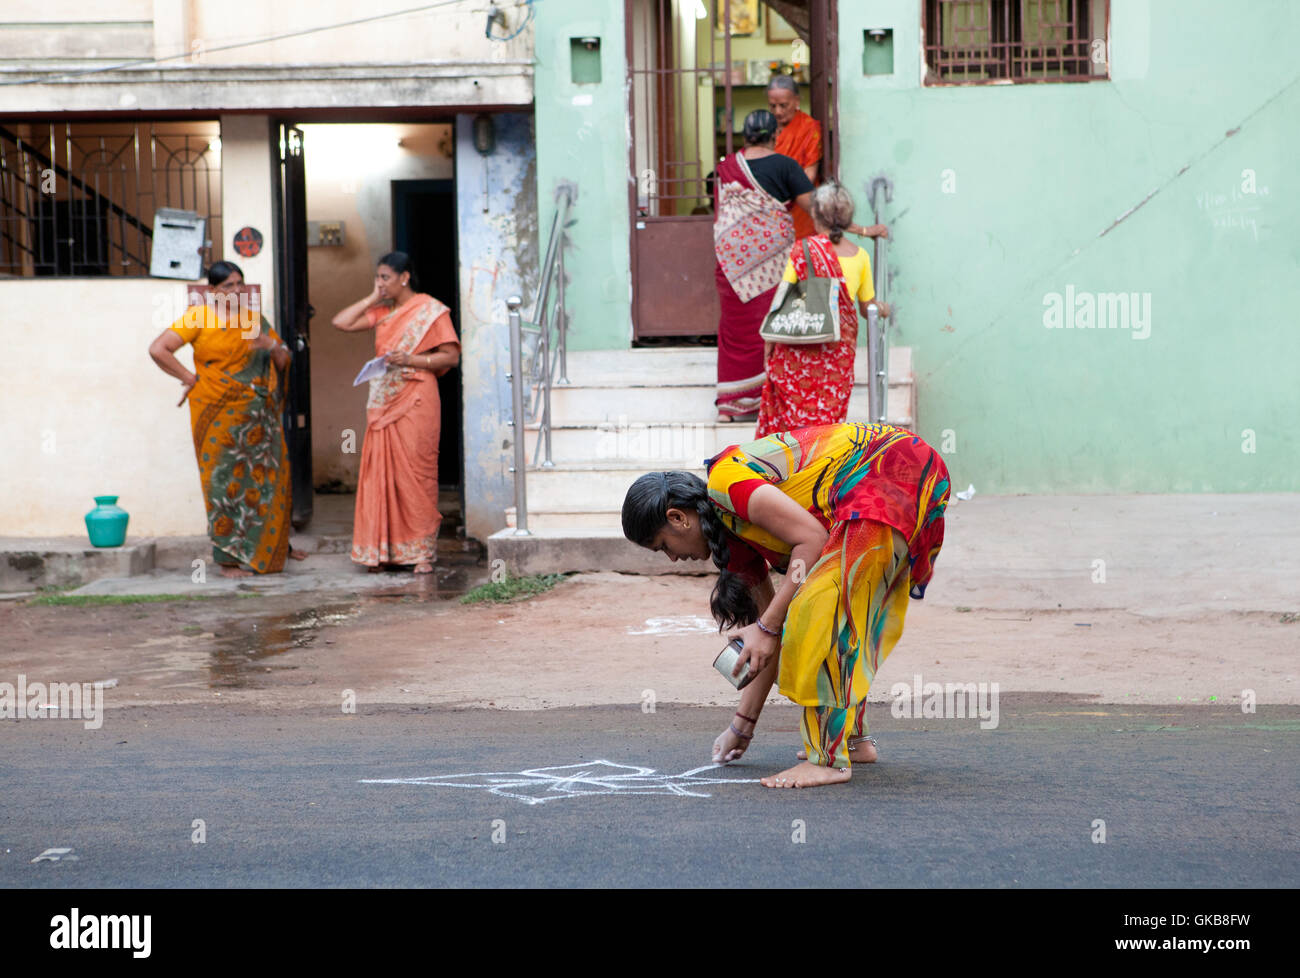 Mujer creación de harina de arroz ornamento en el asfalto para un festival religioso en Tiruchirappalli, India Foto de stock